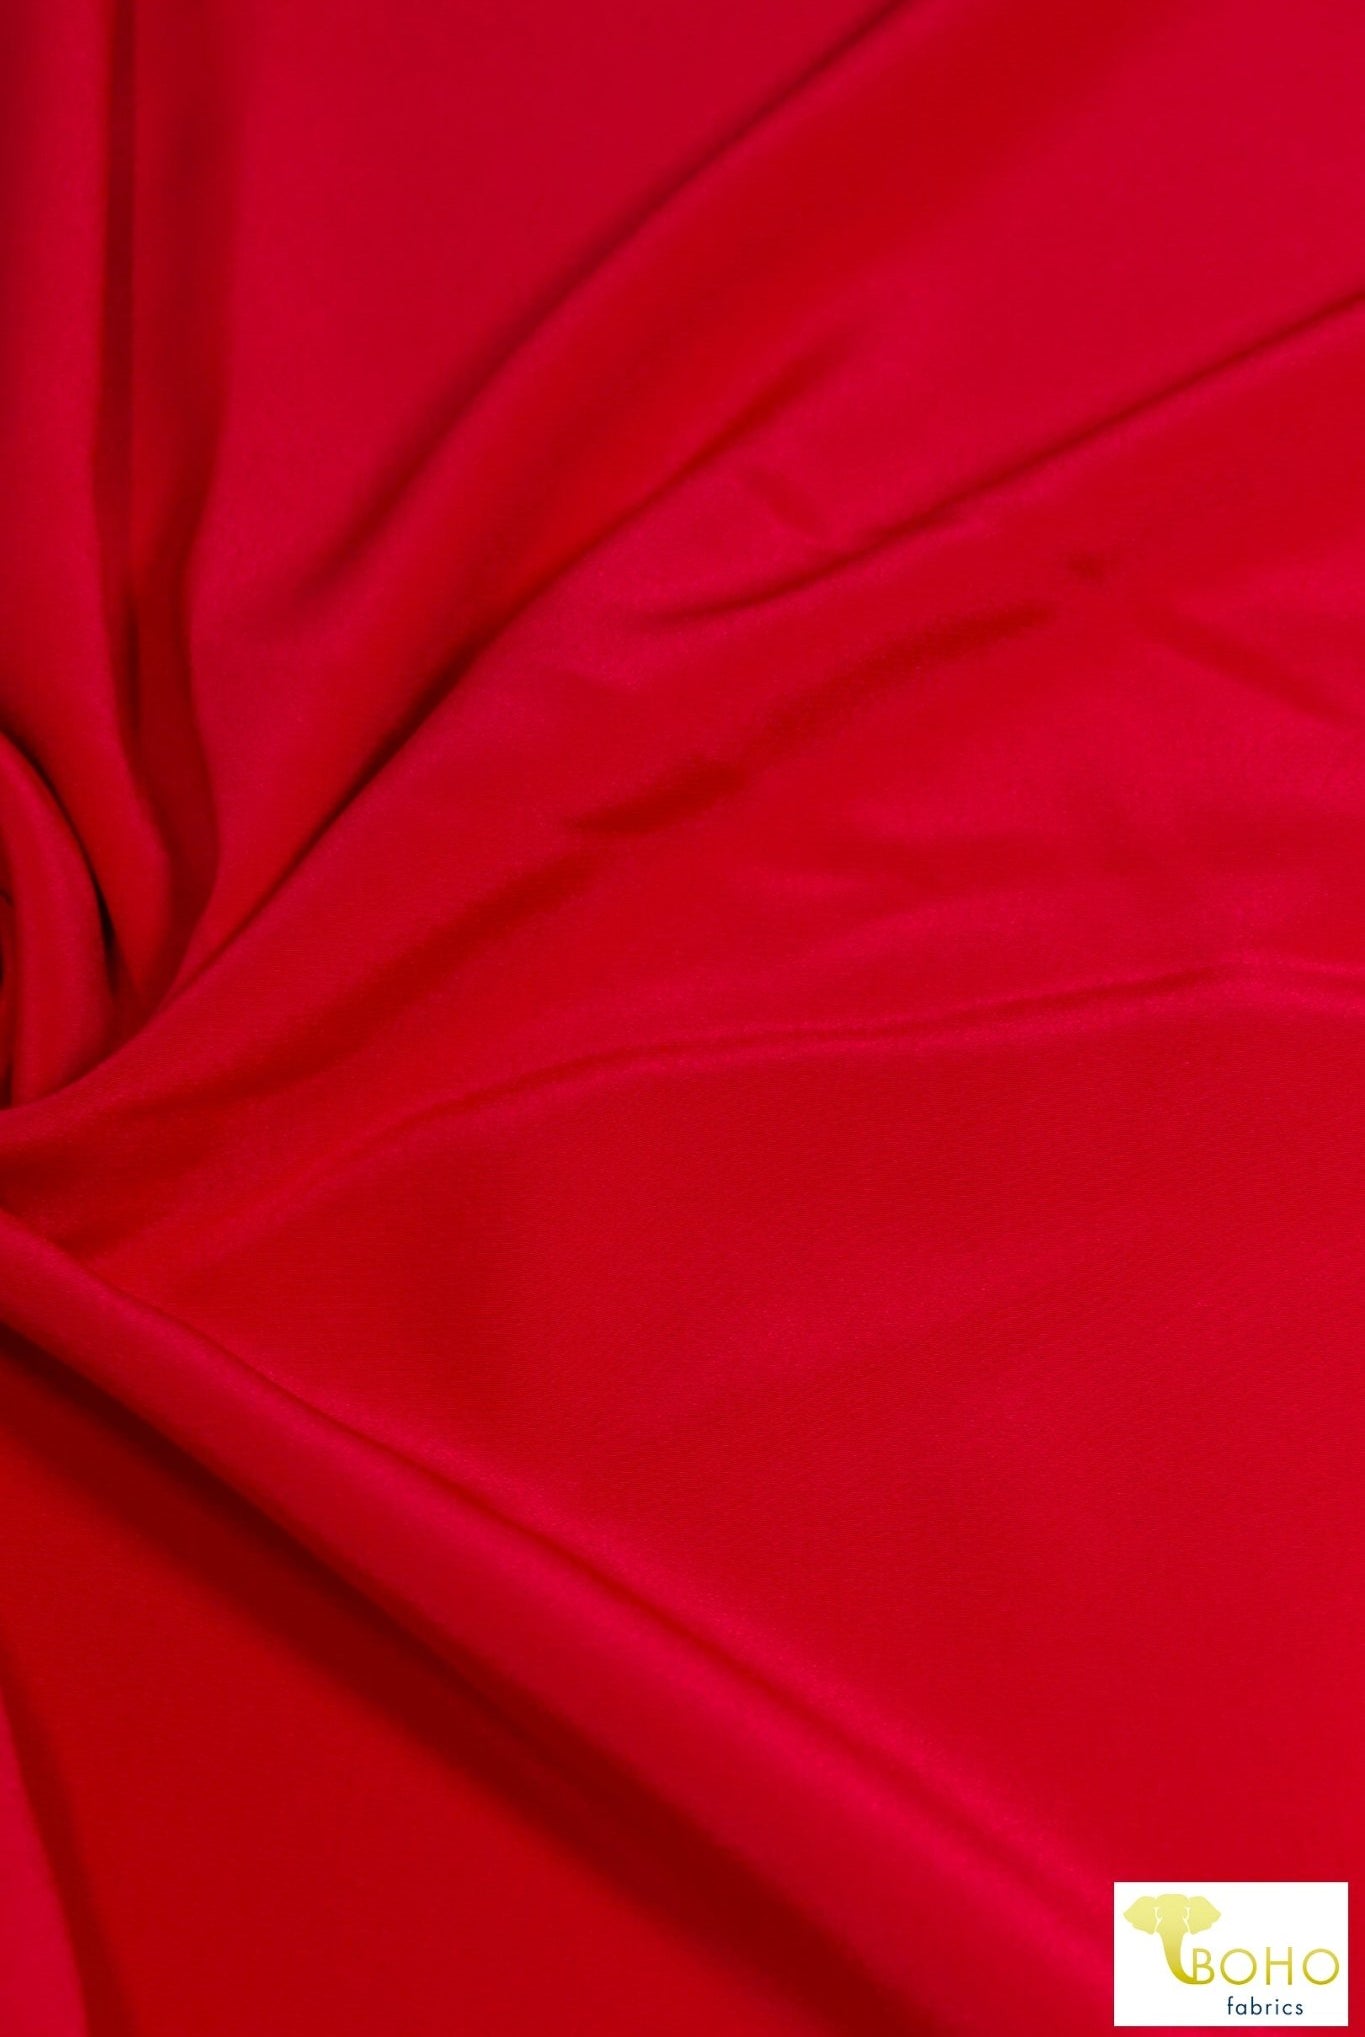 Candy Apple Red, Silk Crepe de Chine Woven Fabric. - Boho Fabrics - Crepe, Woven